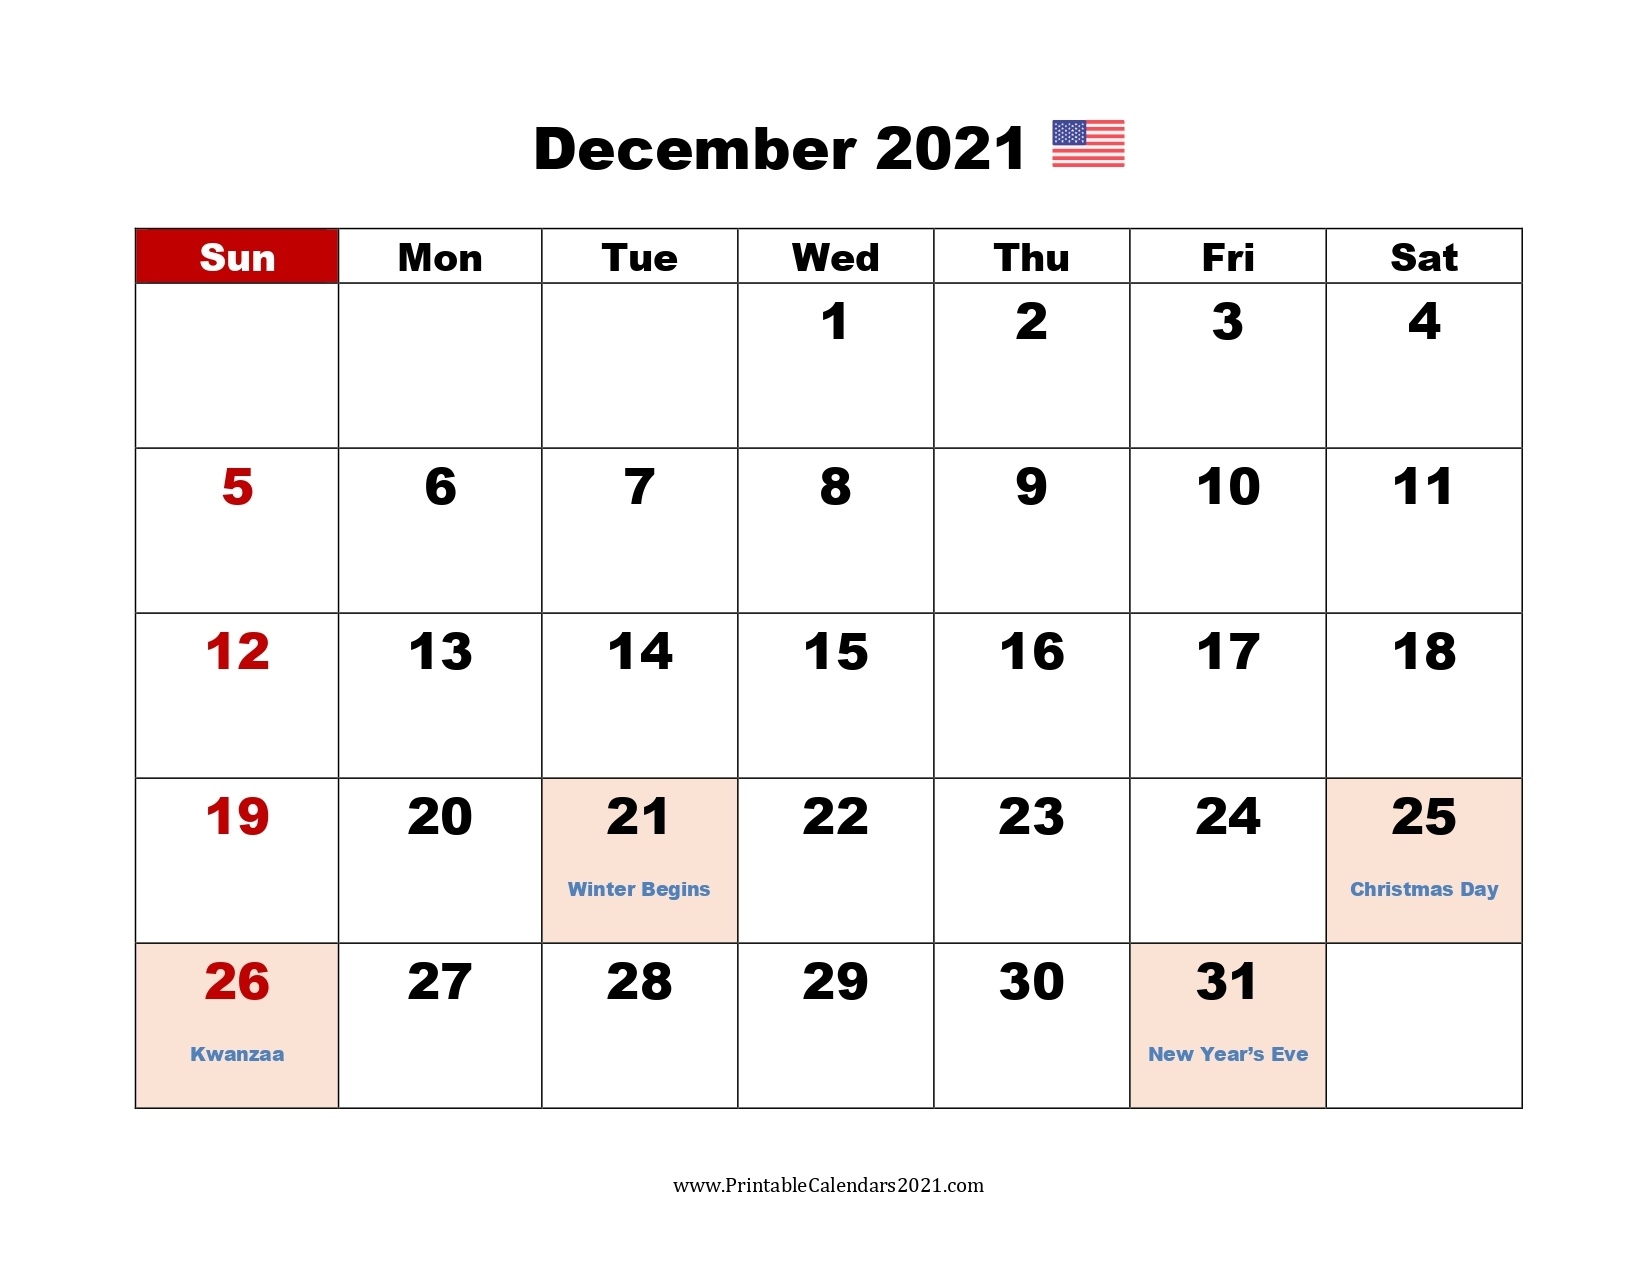 40+ December 2021 Calendar Printable, December 2021 Calendar Pdf Printable January Through December 2021 Calendar